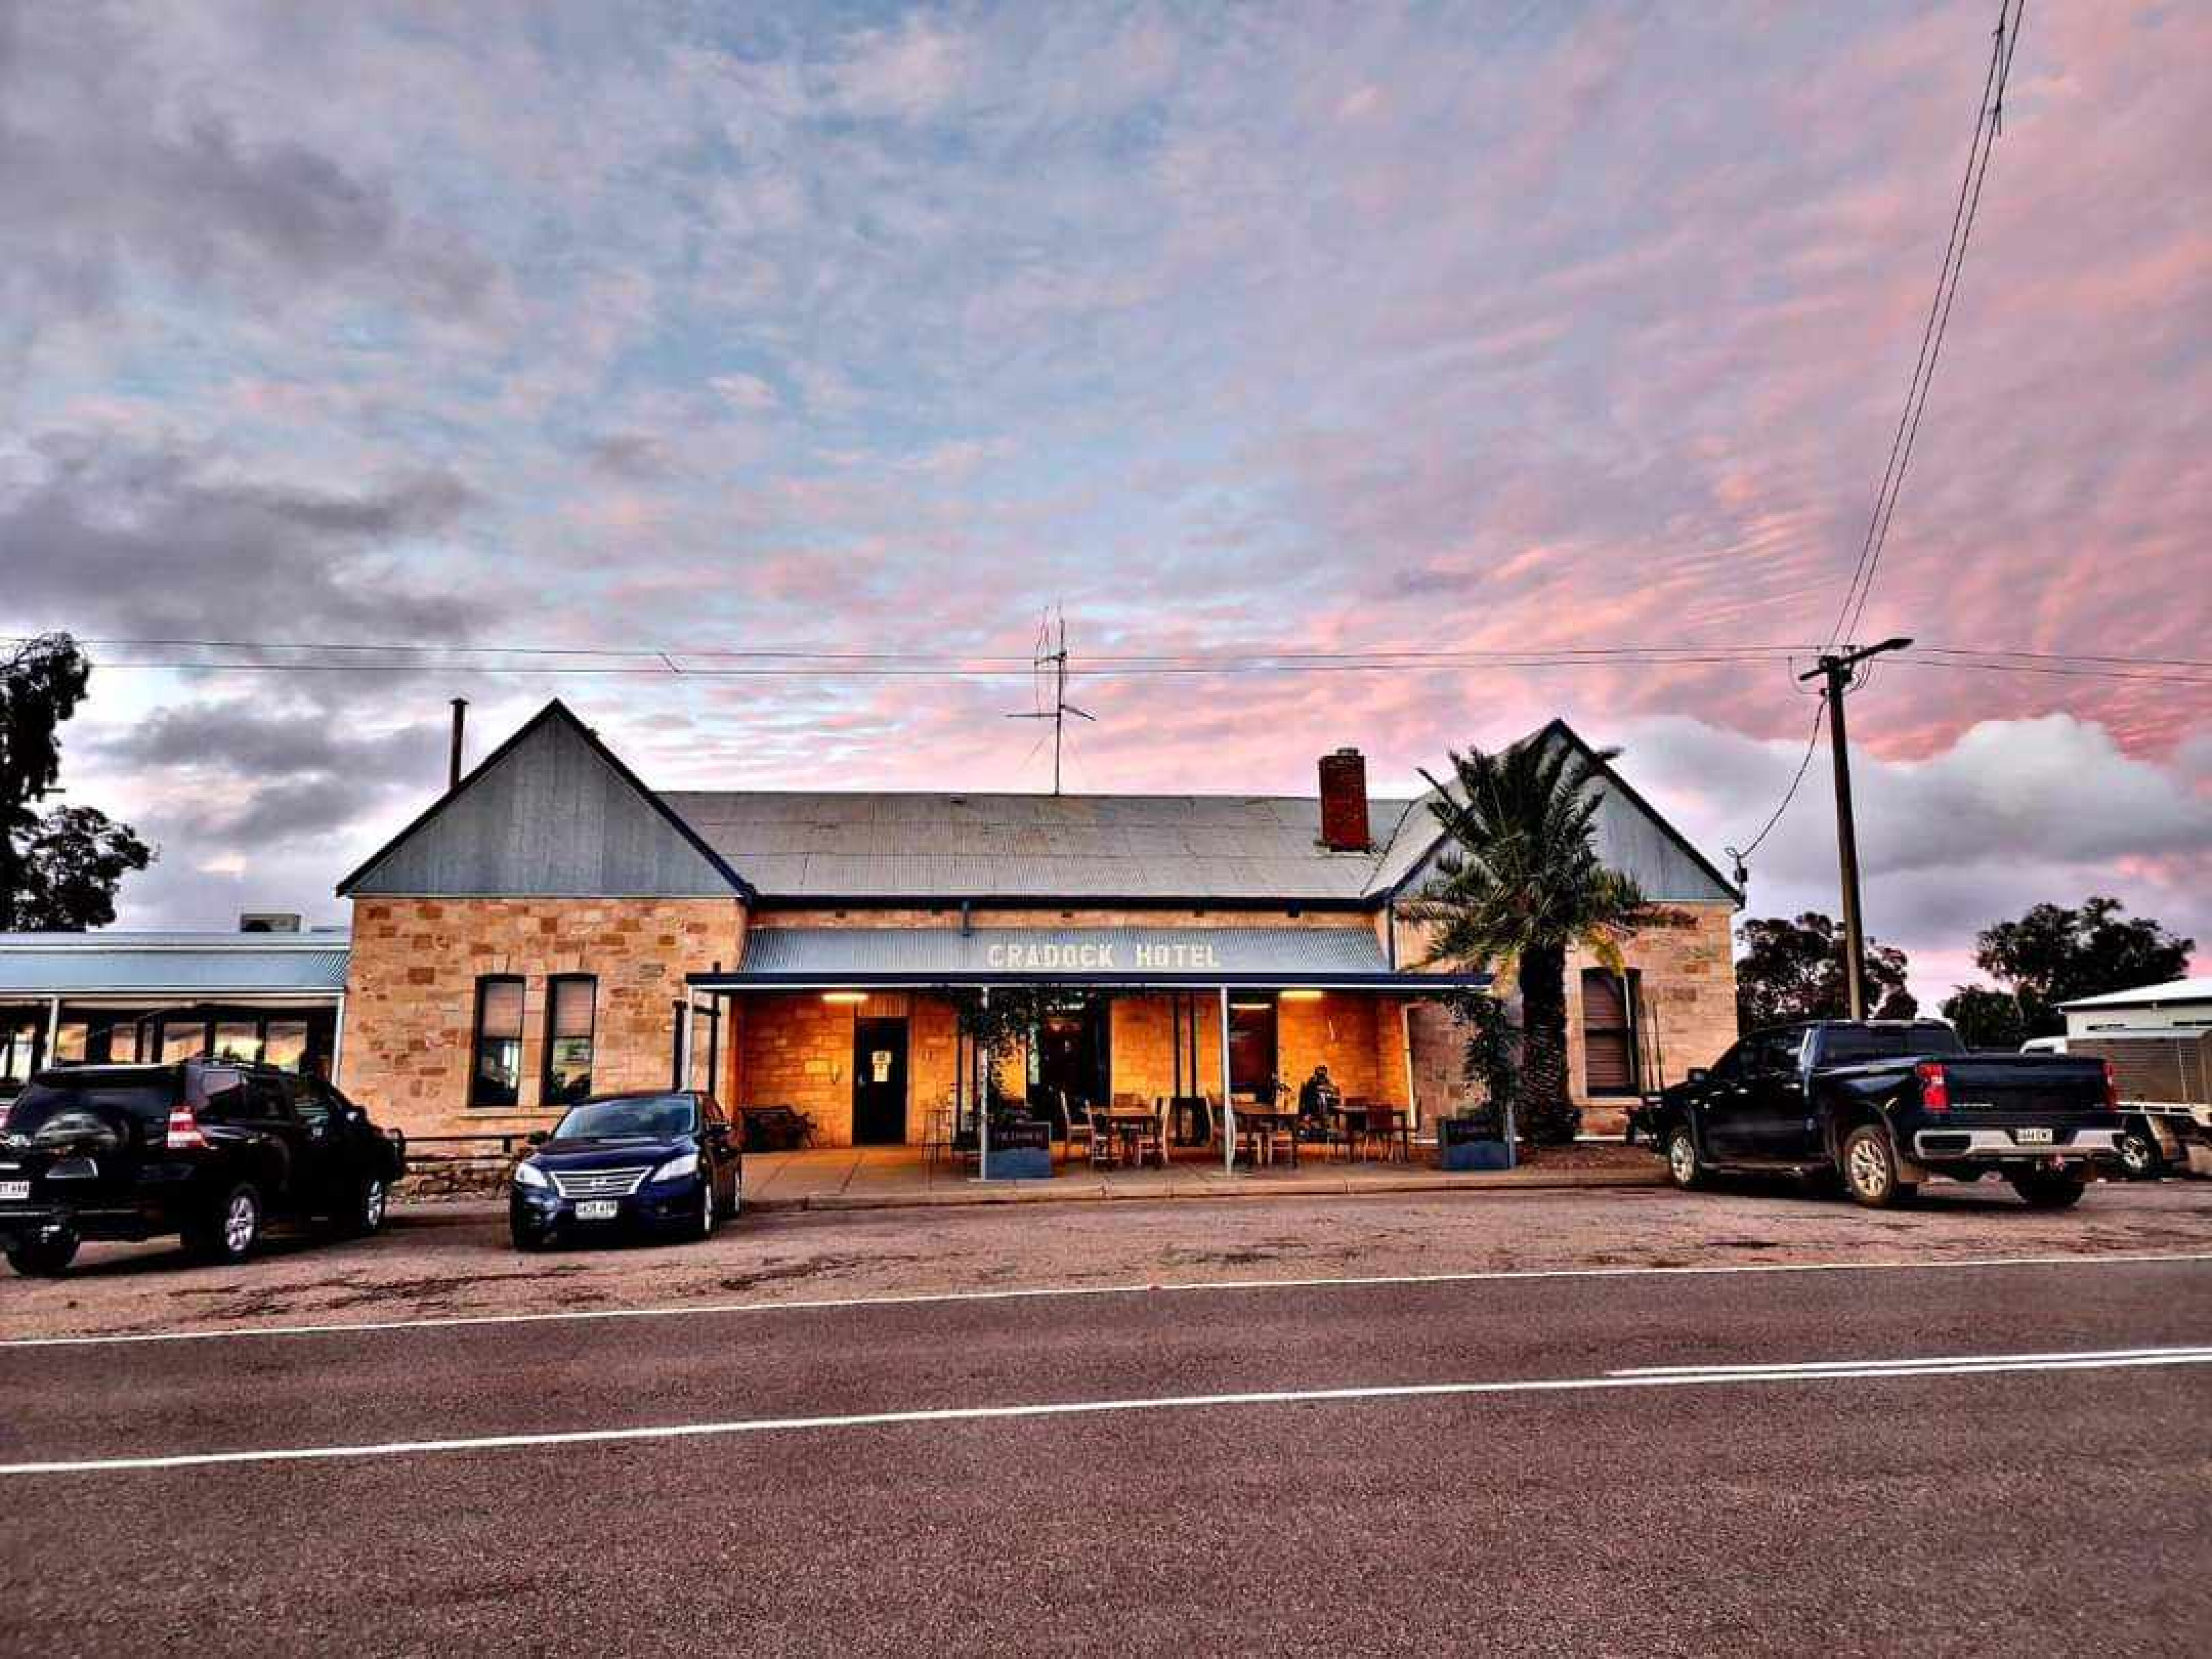 84712447/pub evening cradock hotel south australia outback pub crawl 4x4 australia jpeg